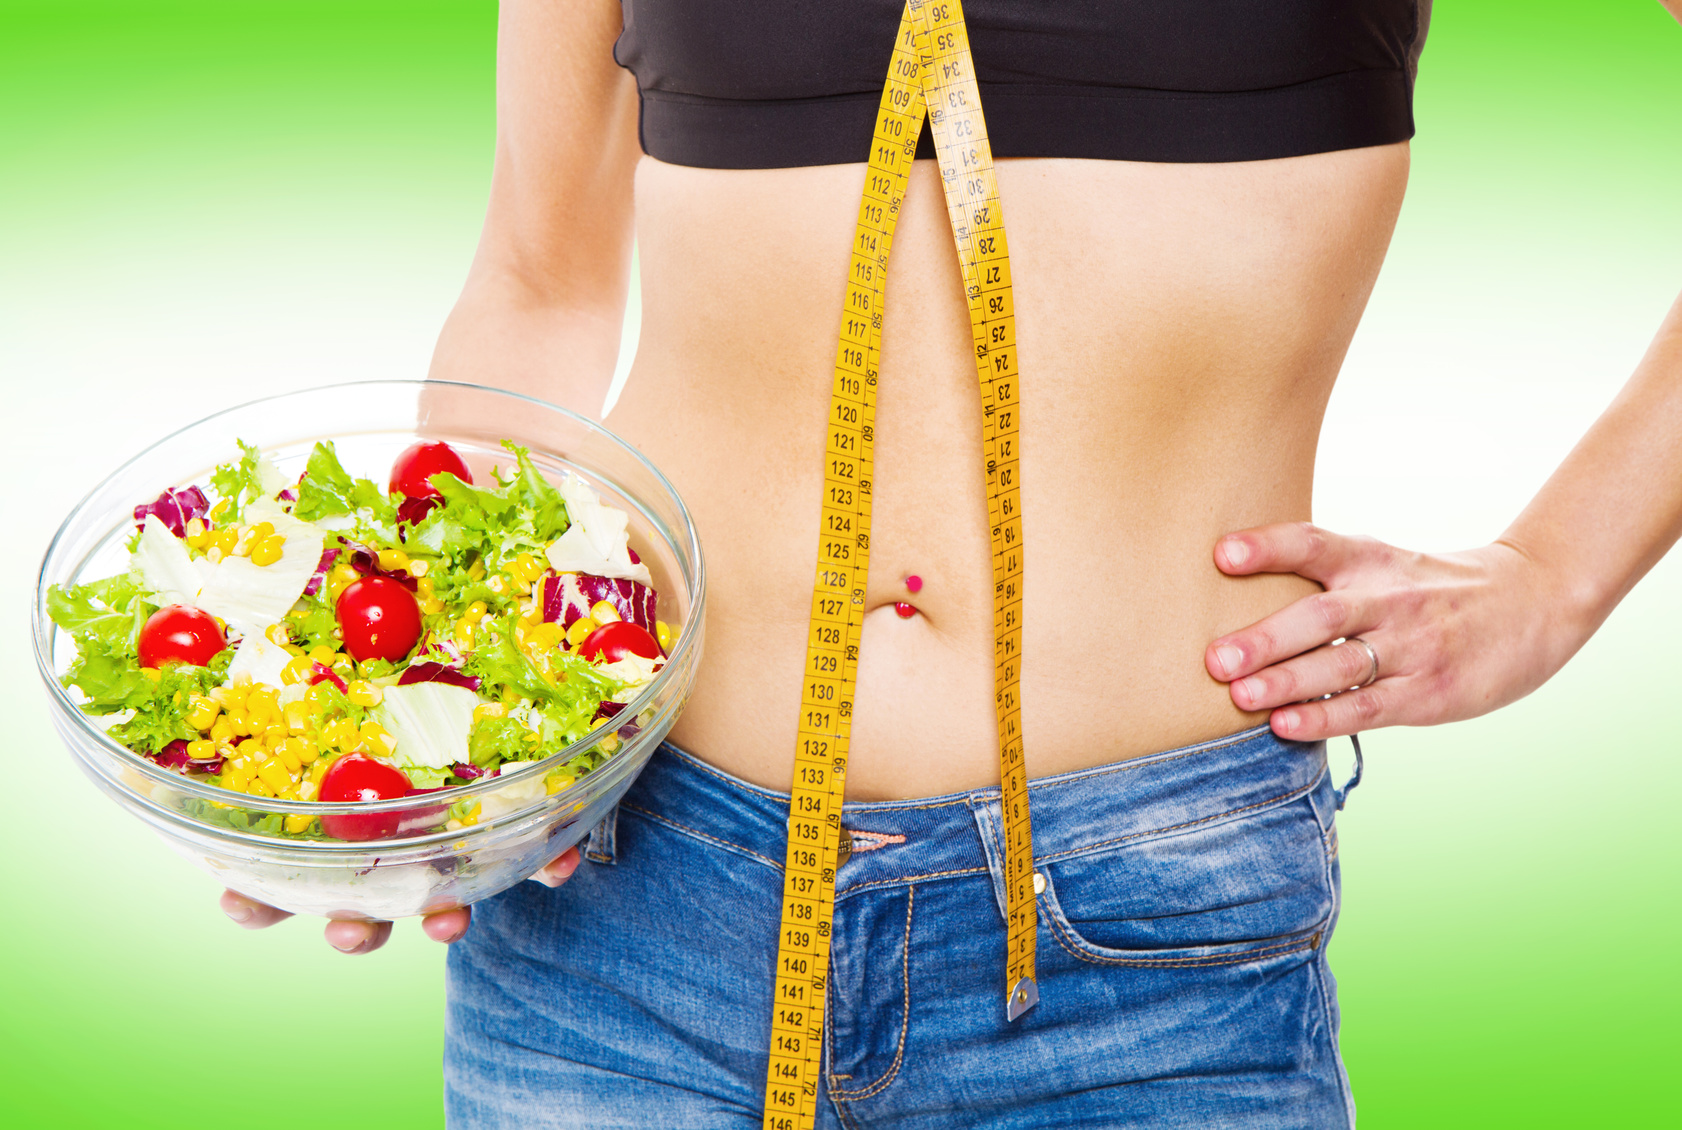 Dieta para reducir abdomen